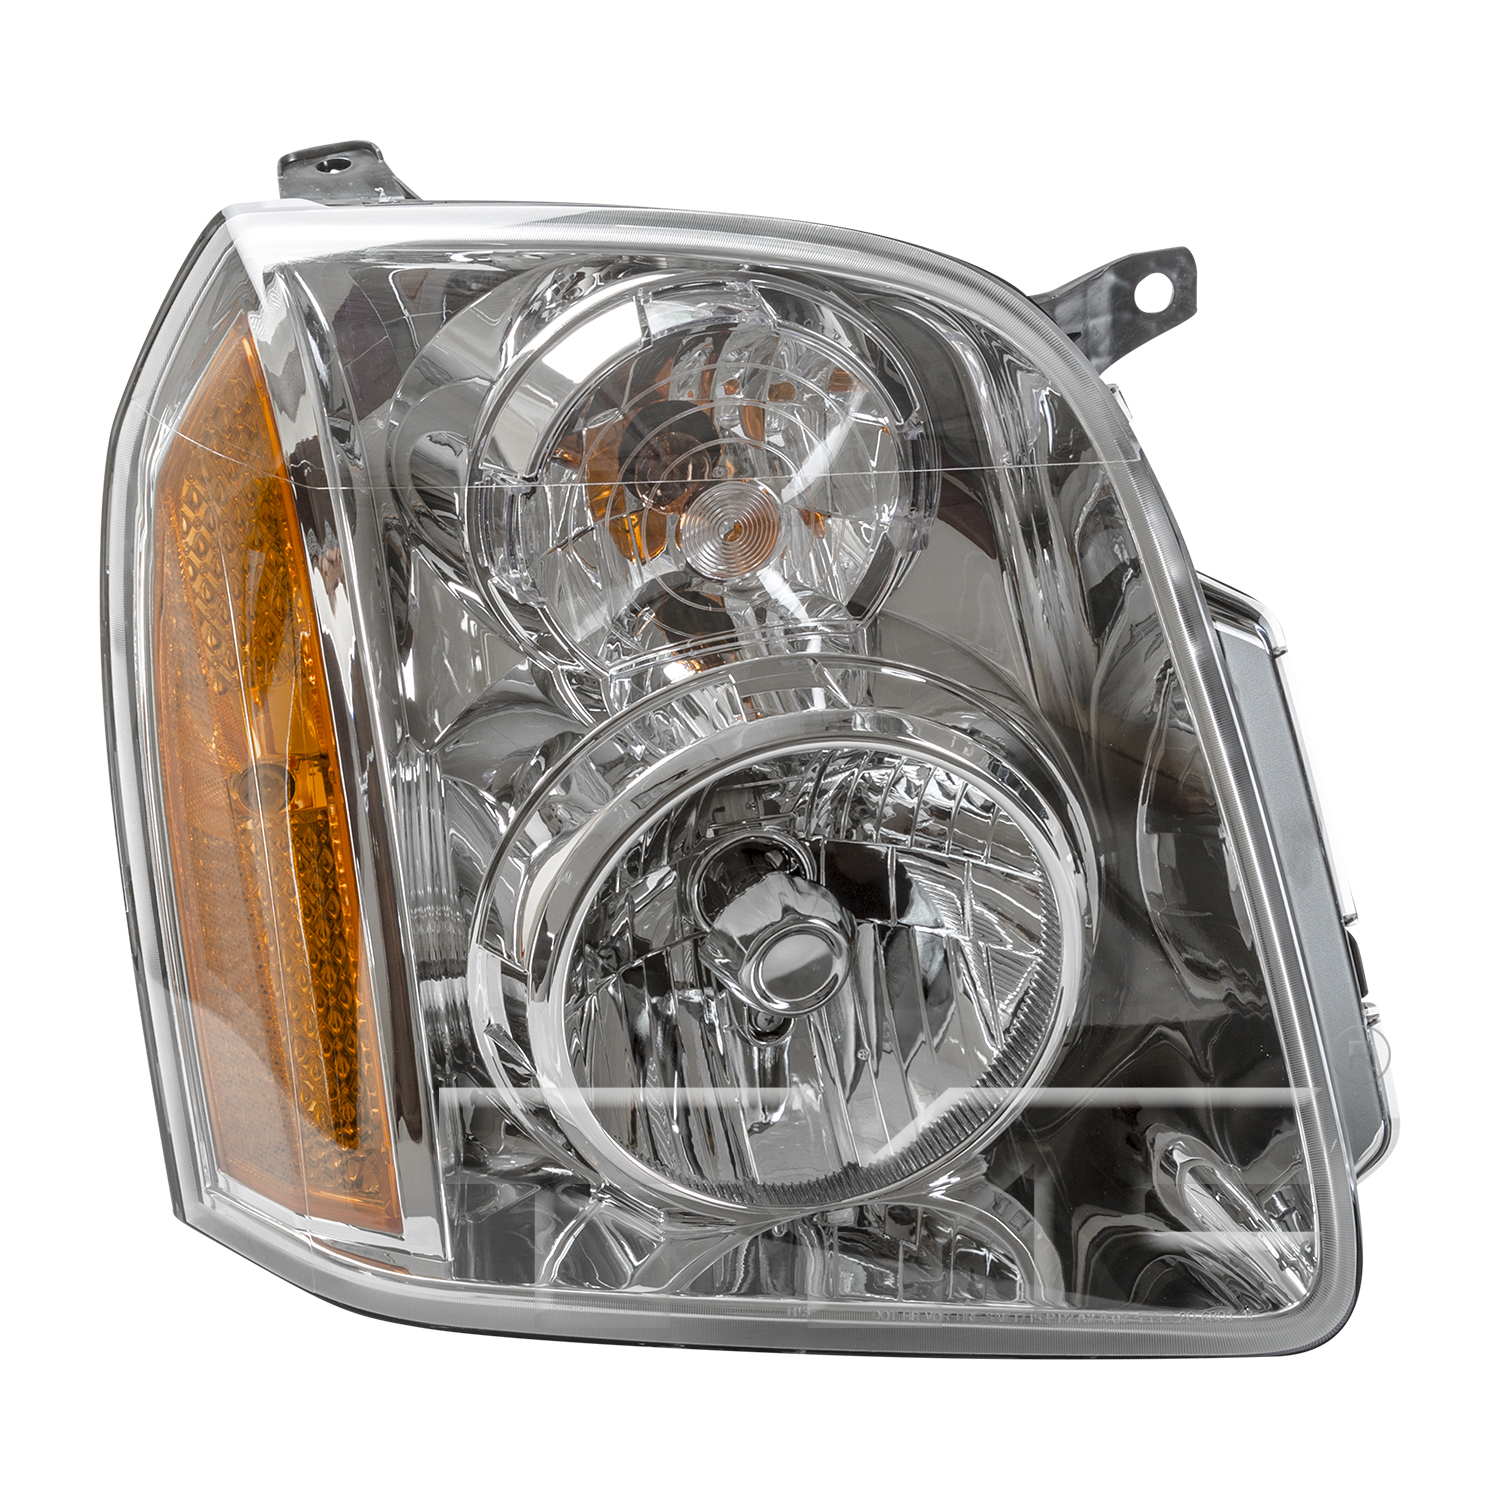 Aftermarket HEADLIGHTS for GMC - YUKON XL 1500, YUKON XL 1500,07-14,RT Headlamp assy composite